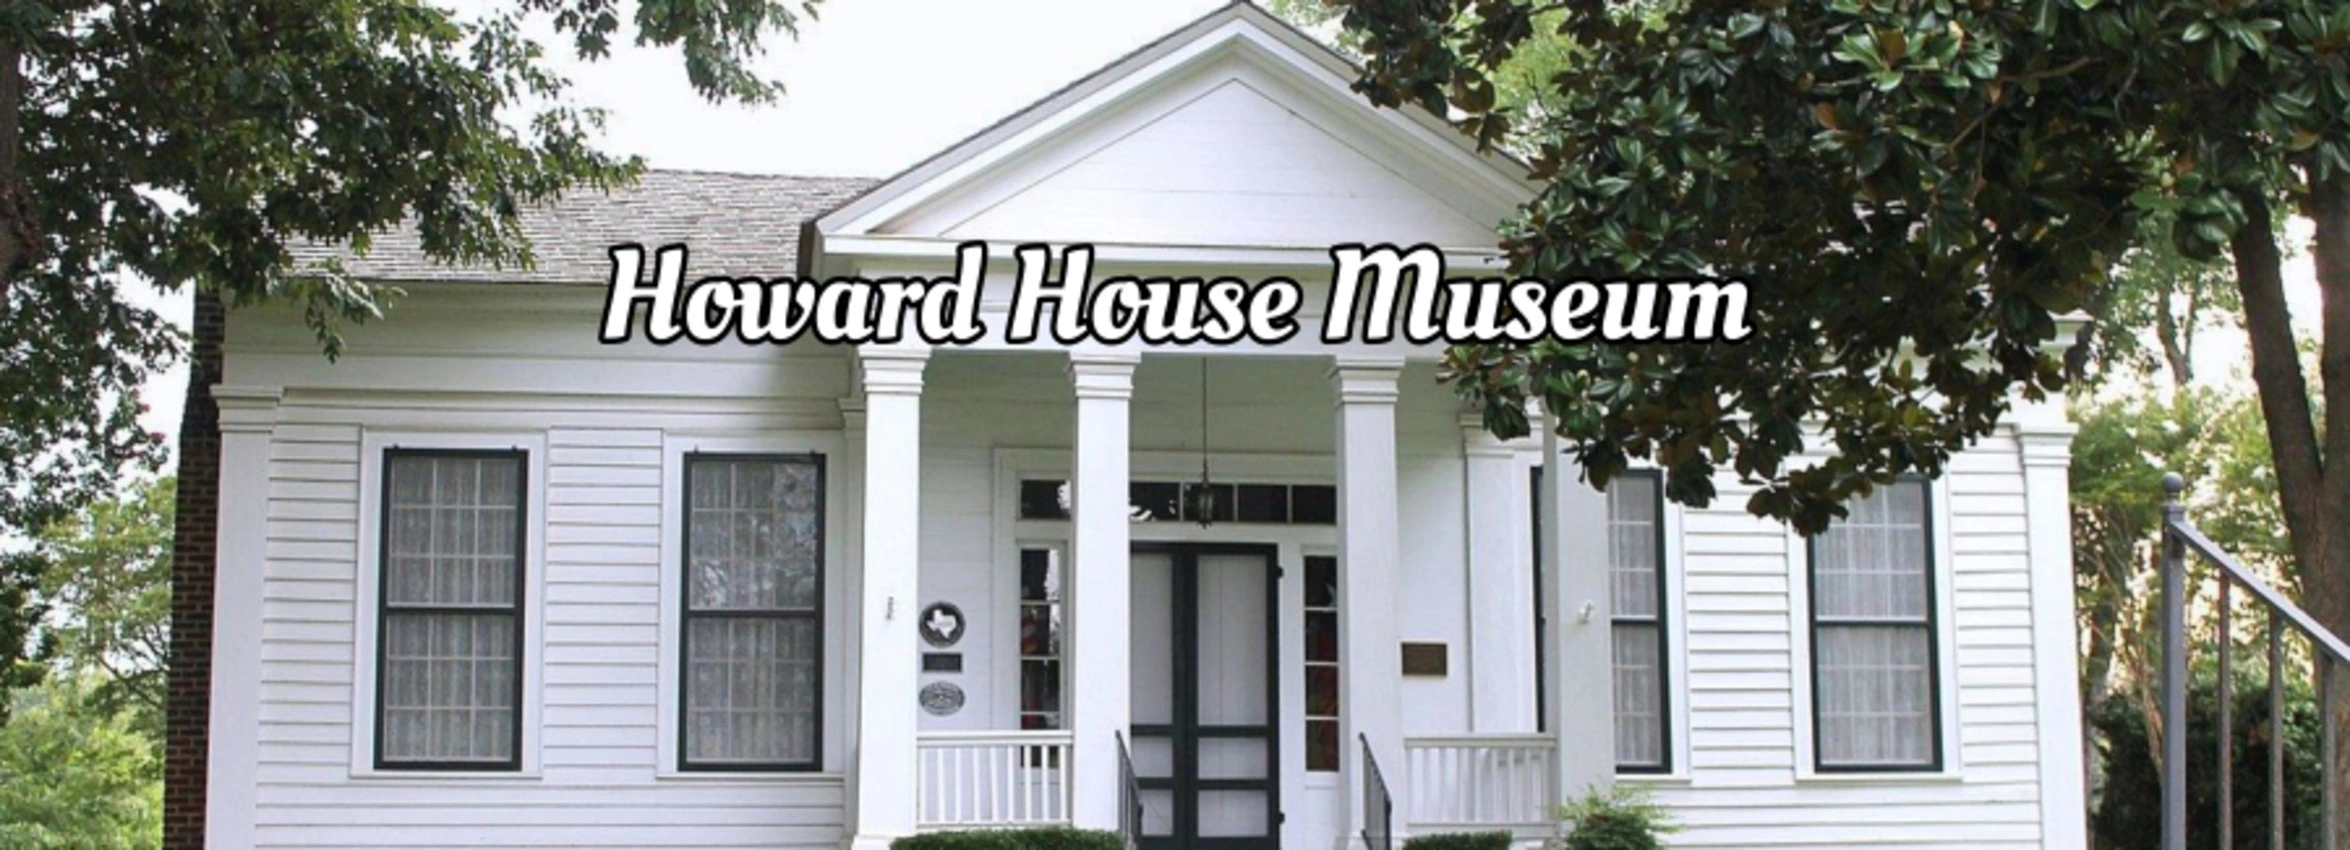 Howard-House-Museum_Desktop_ET